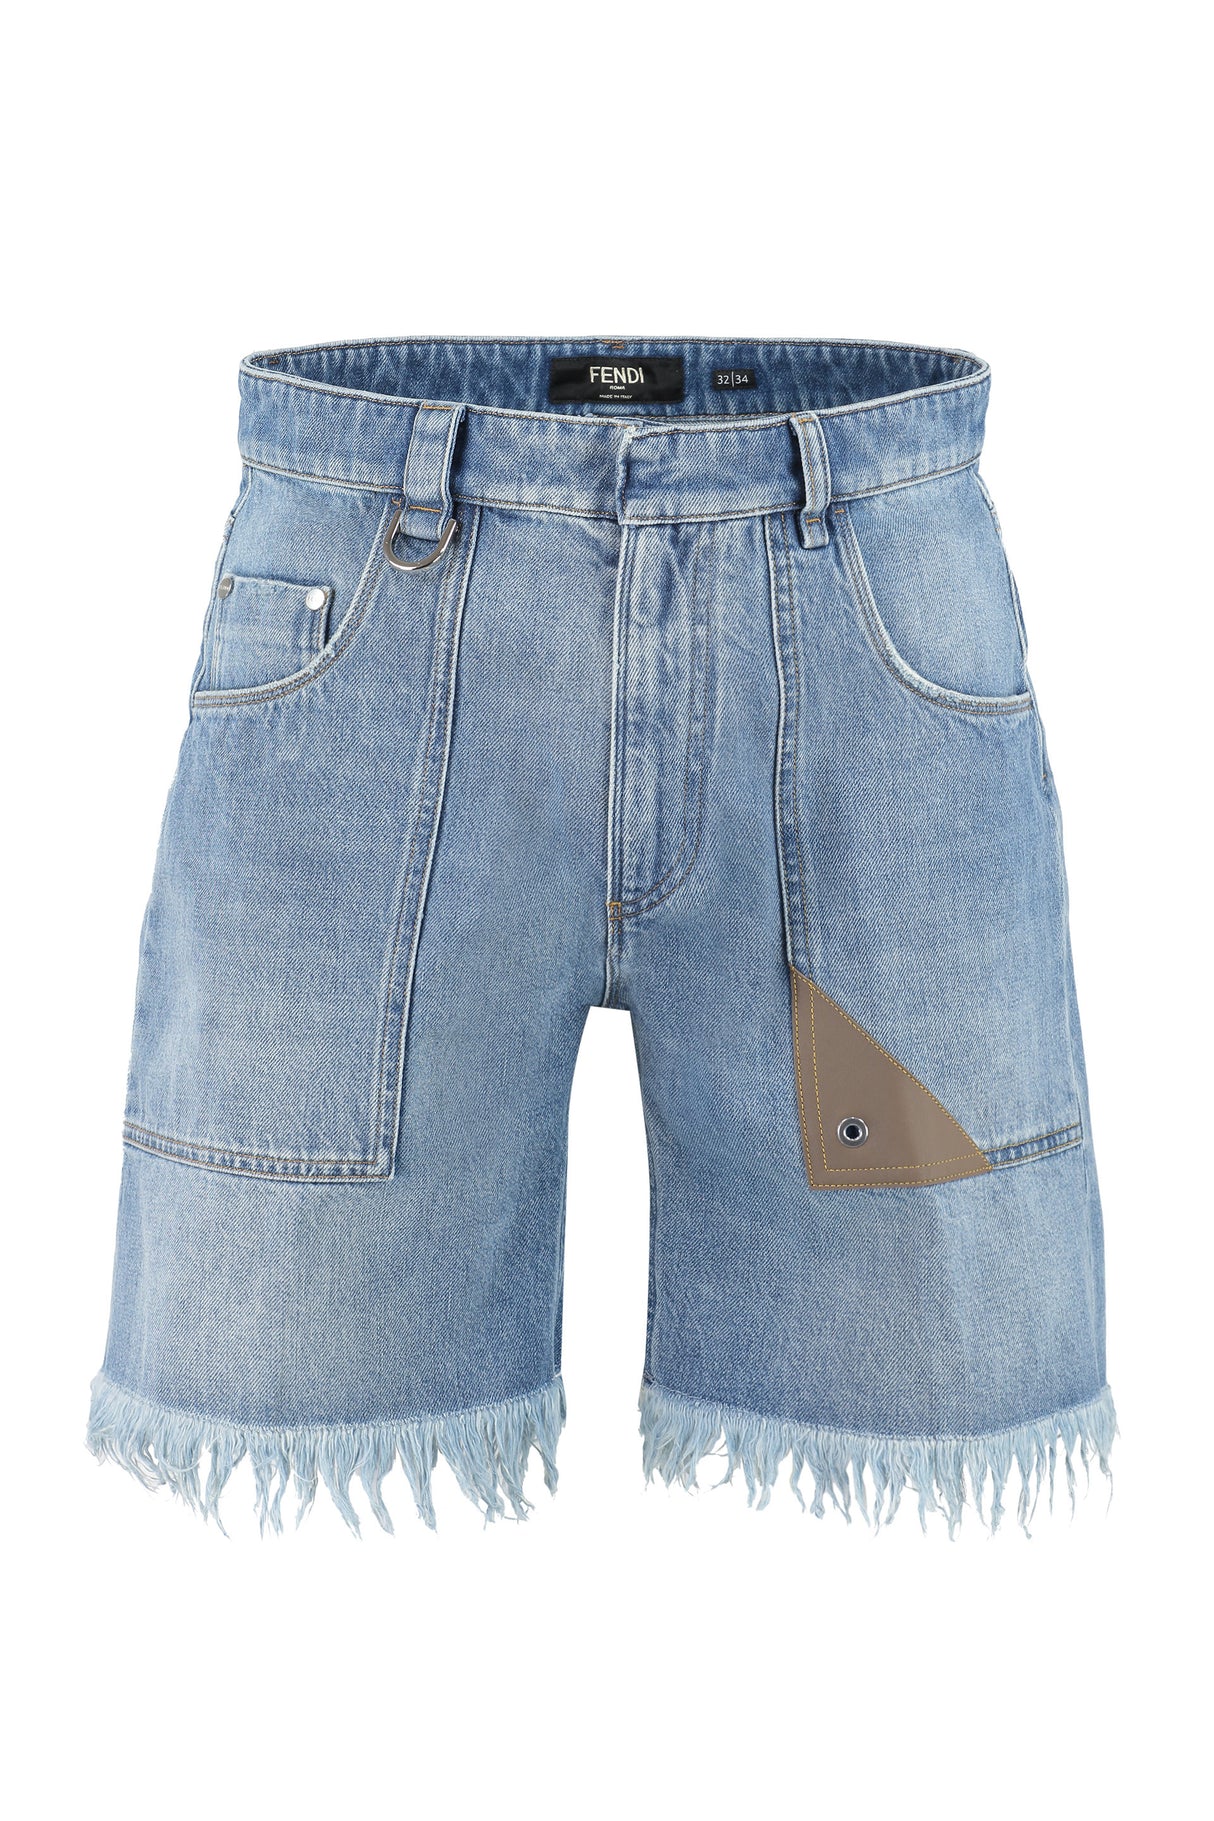 FENDI Men's Blue Denim Shorts with Leather Details and Frayed Hem